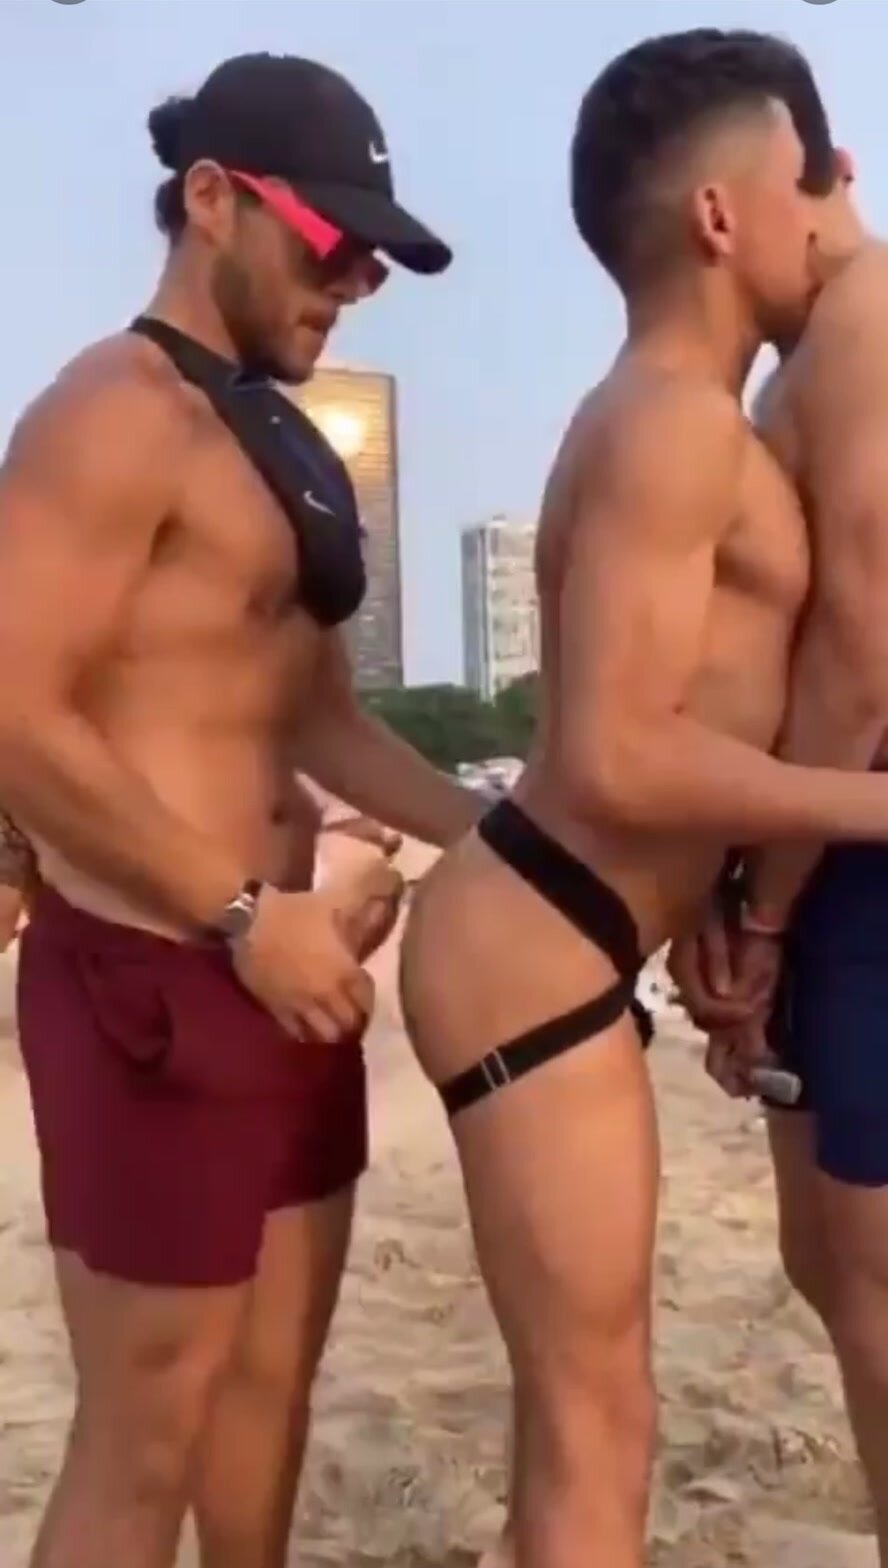 Dudes fucking on the beach